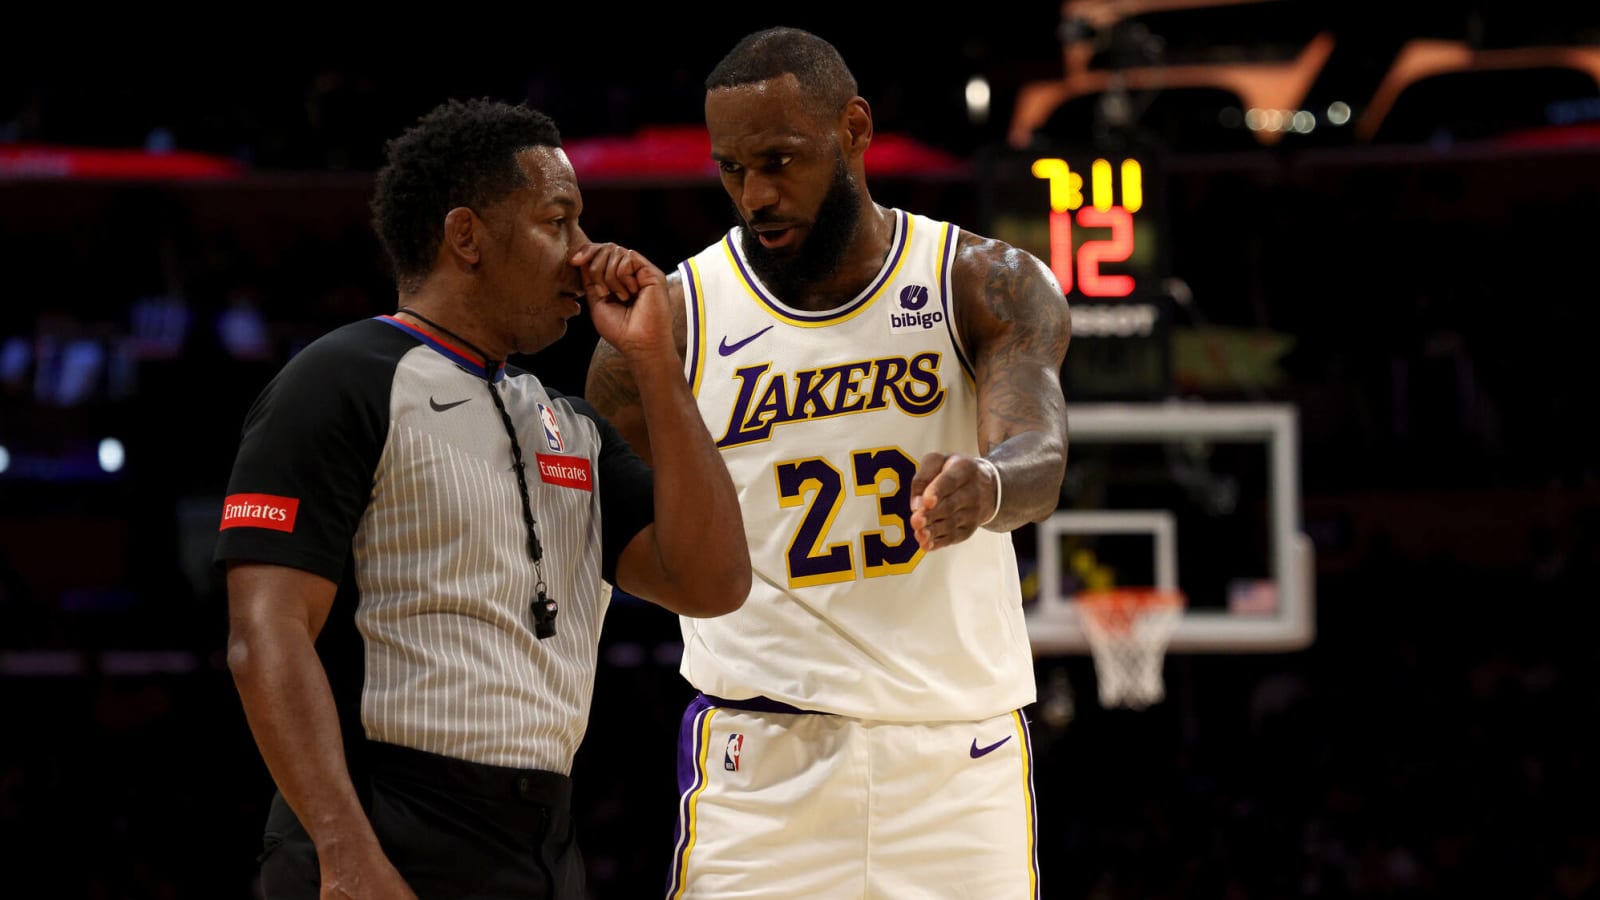 Embarrassing delays mar end of Lakers-Warriors